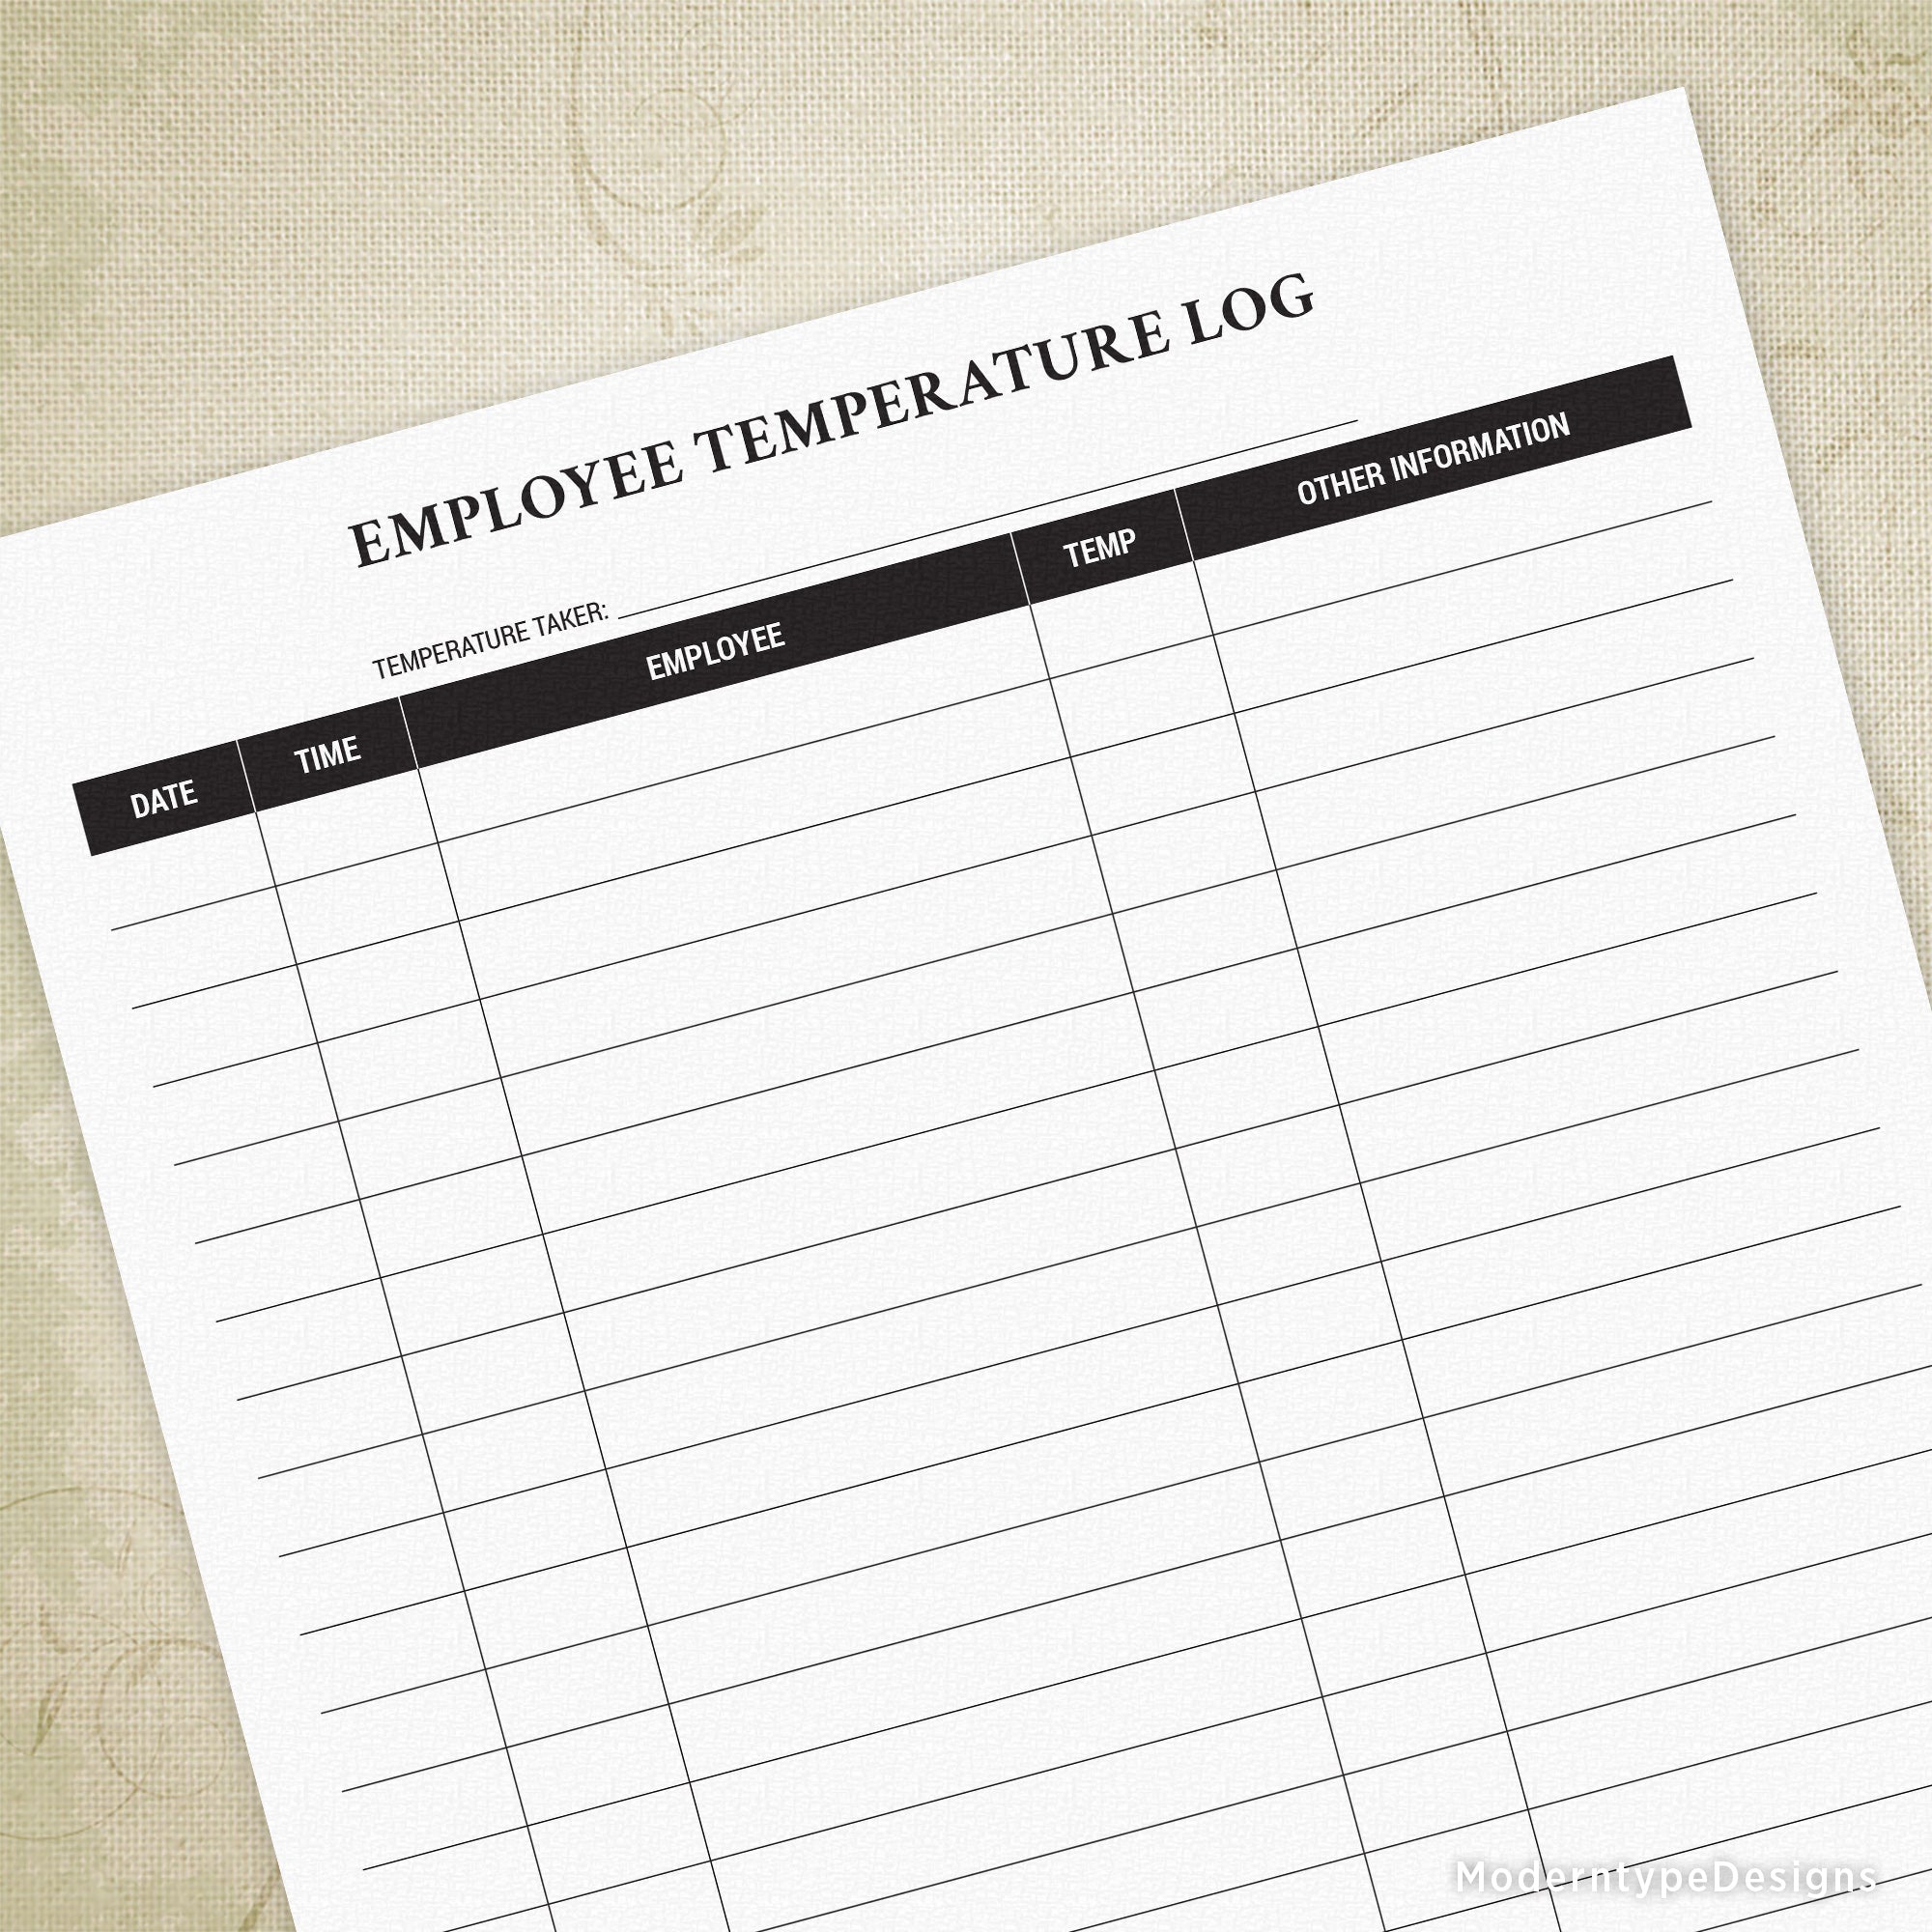 Employee Temperature Log Printable Form